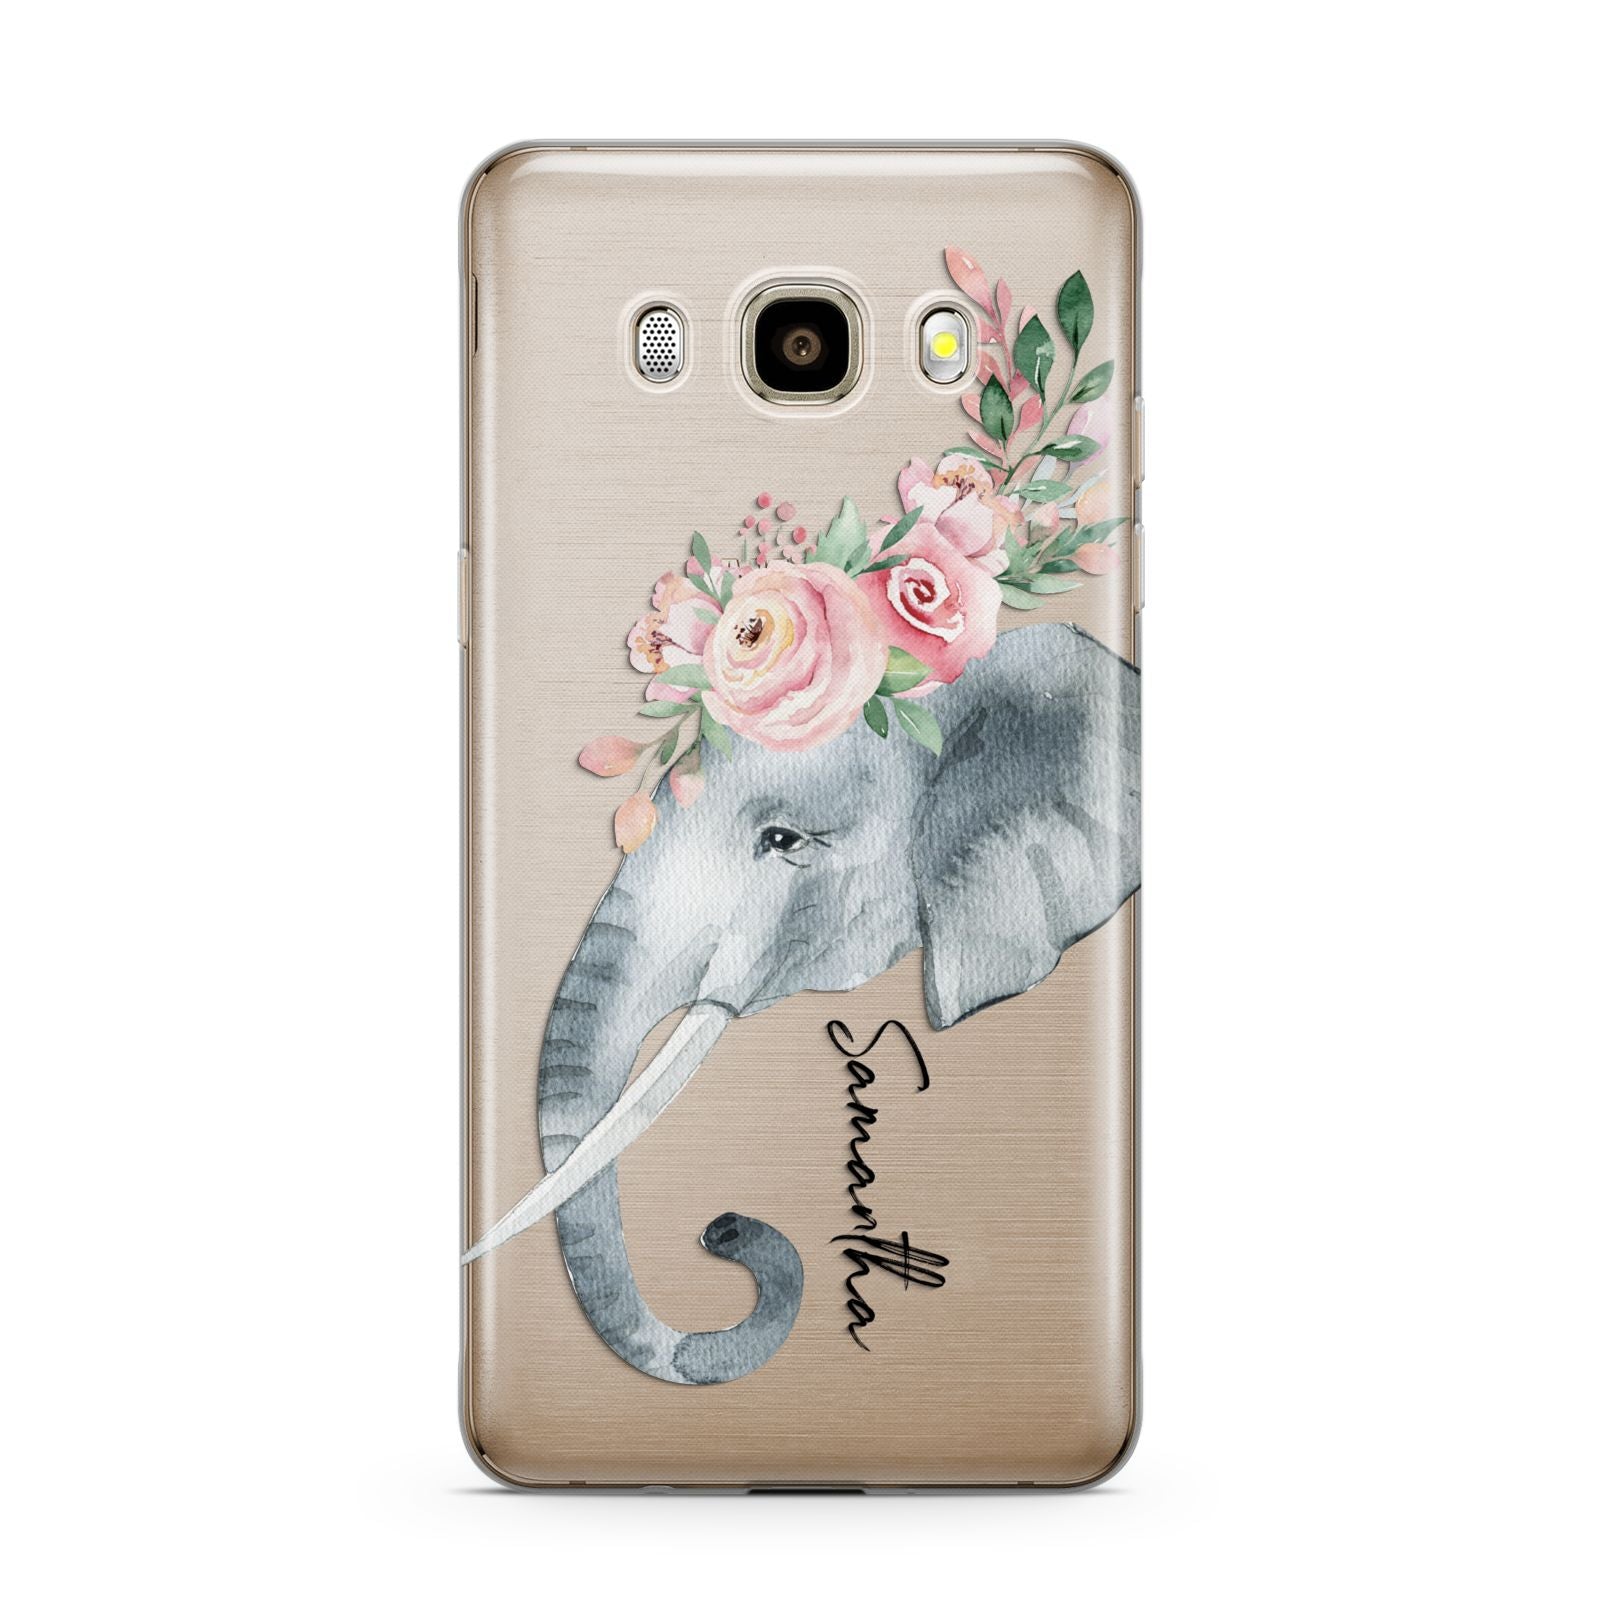 Personalised Elephant Samsung Galaxy J7 2016 Case on gold phone